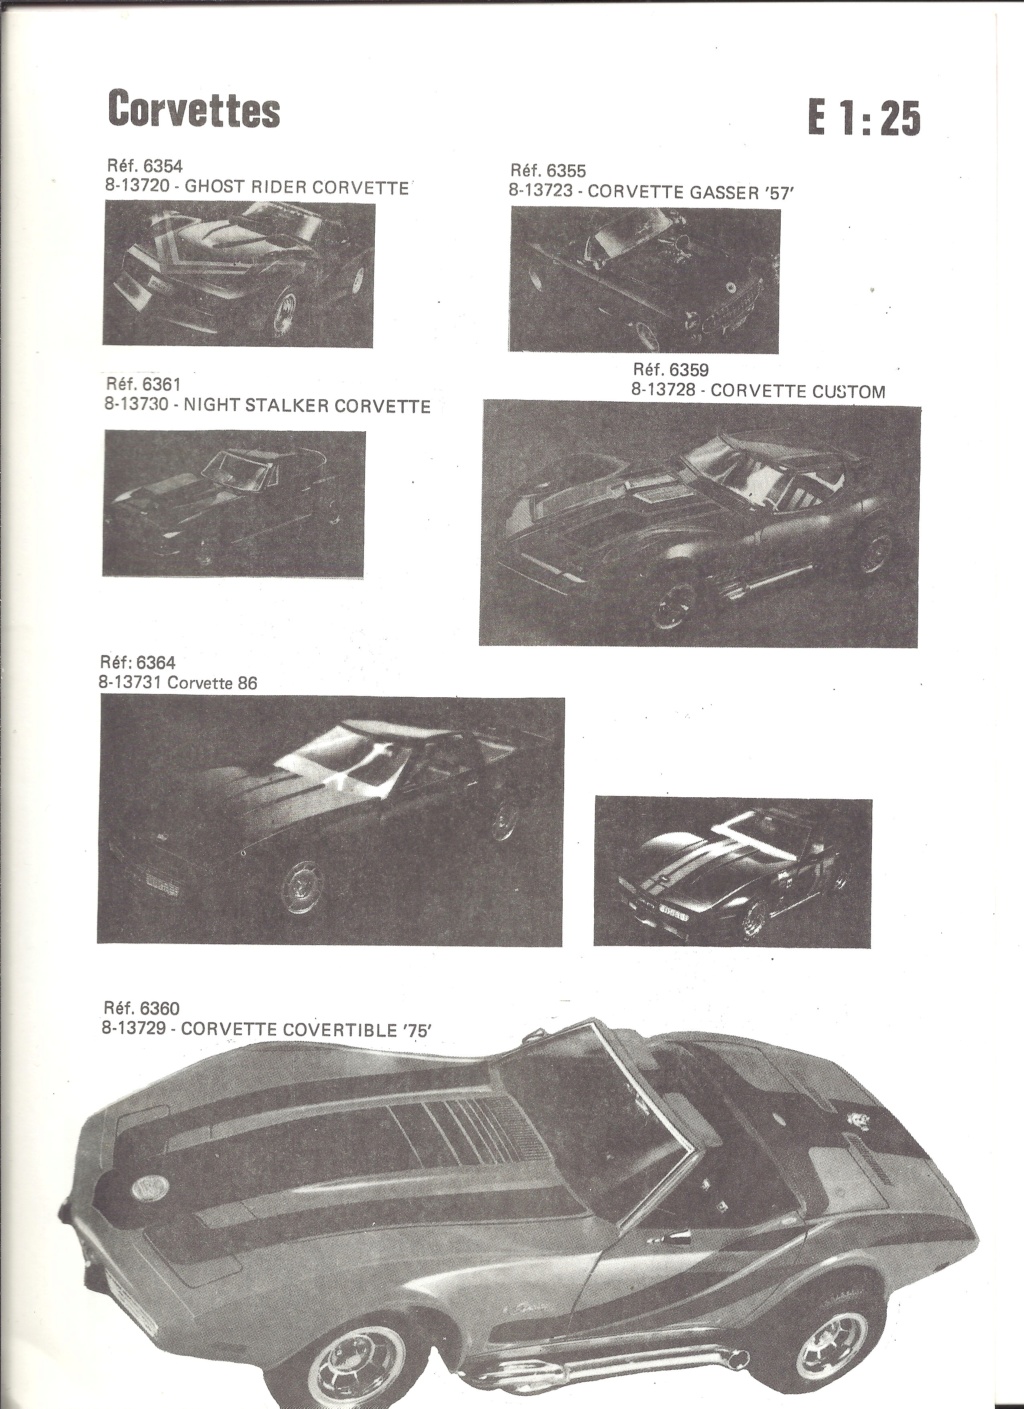 [SPI KAGER 1986] Catalogue JO-HAN, BADGER, MODEL POWER, MPC 1986  Spi_ka39